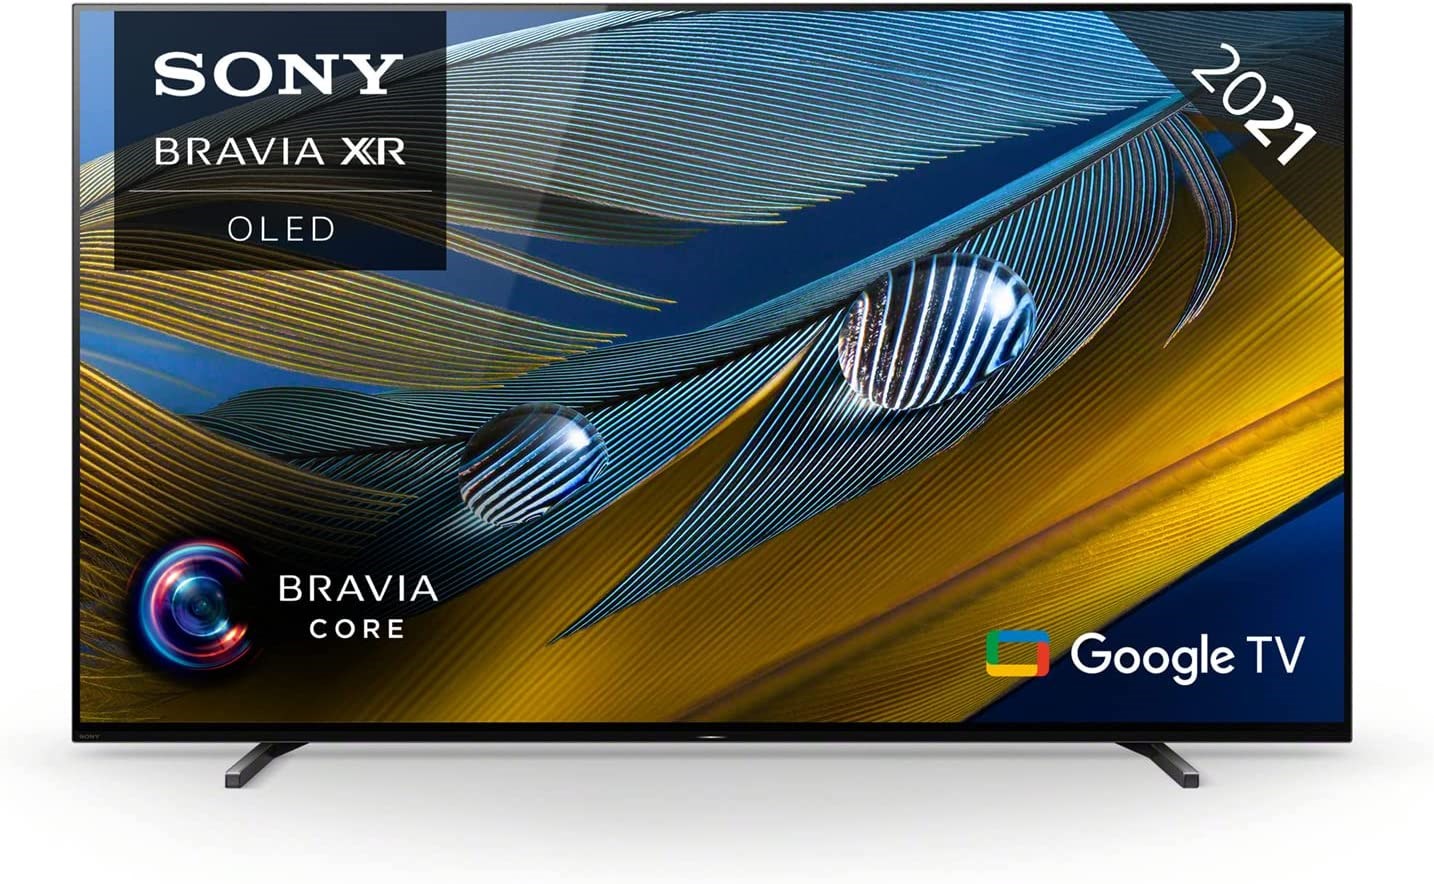 Sony en iyi OLED TV